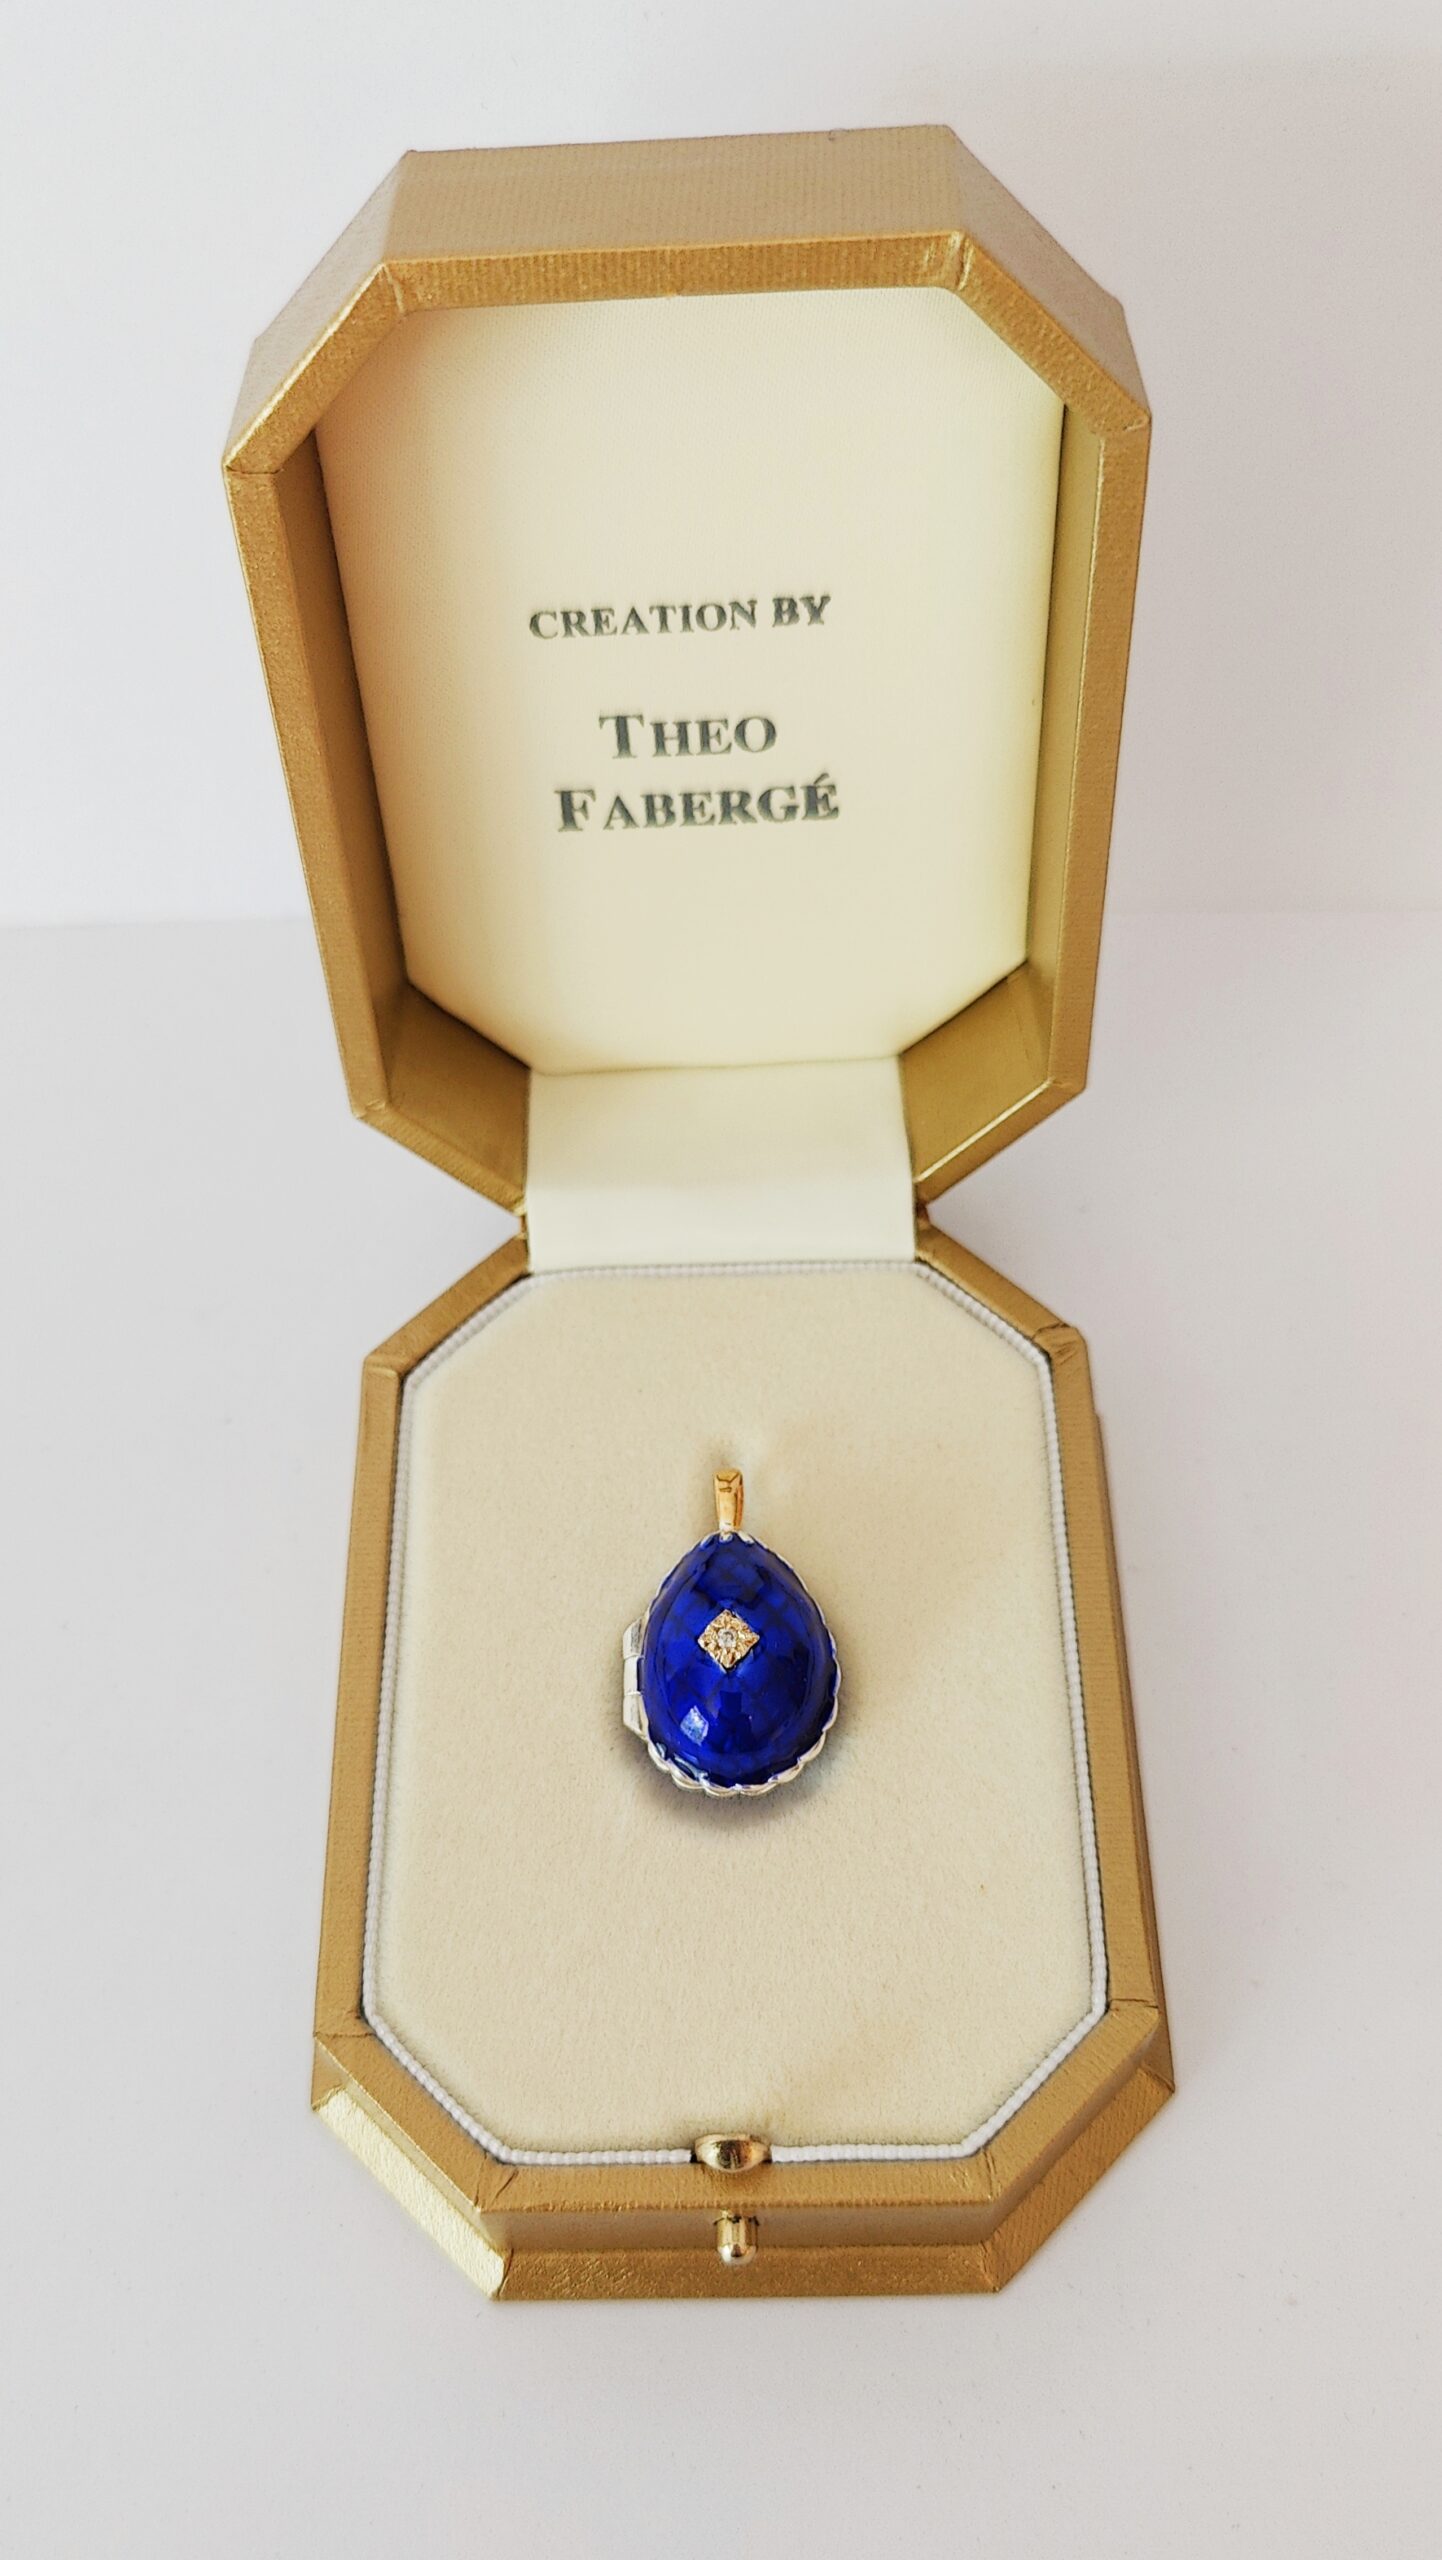 Felix Faberge pendant in its box